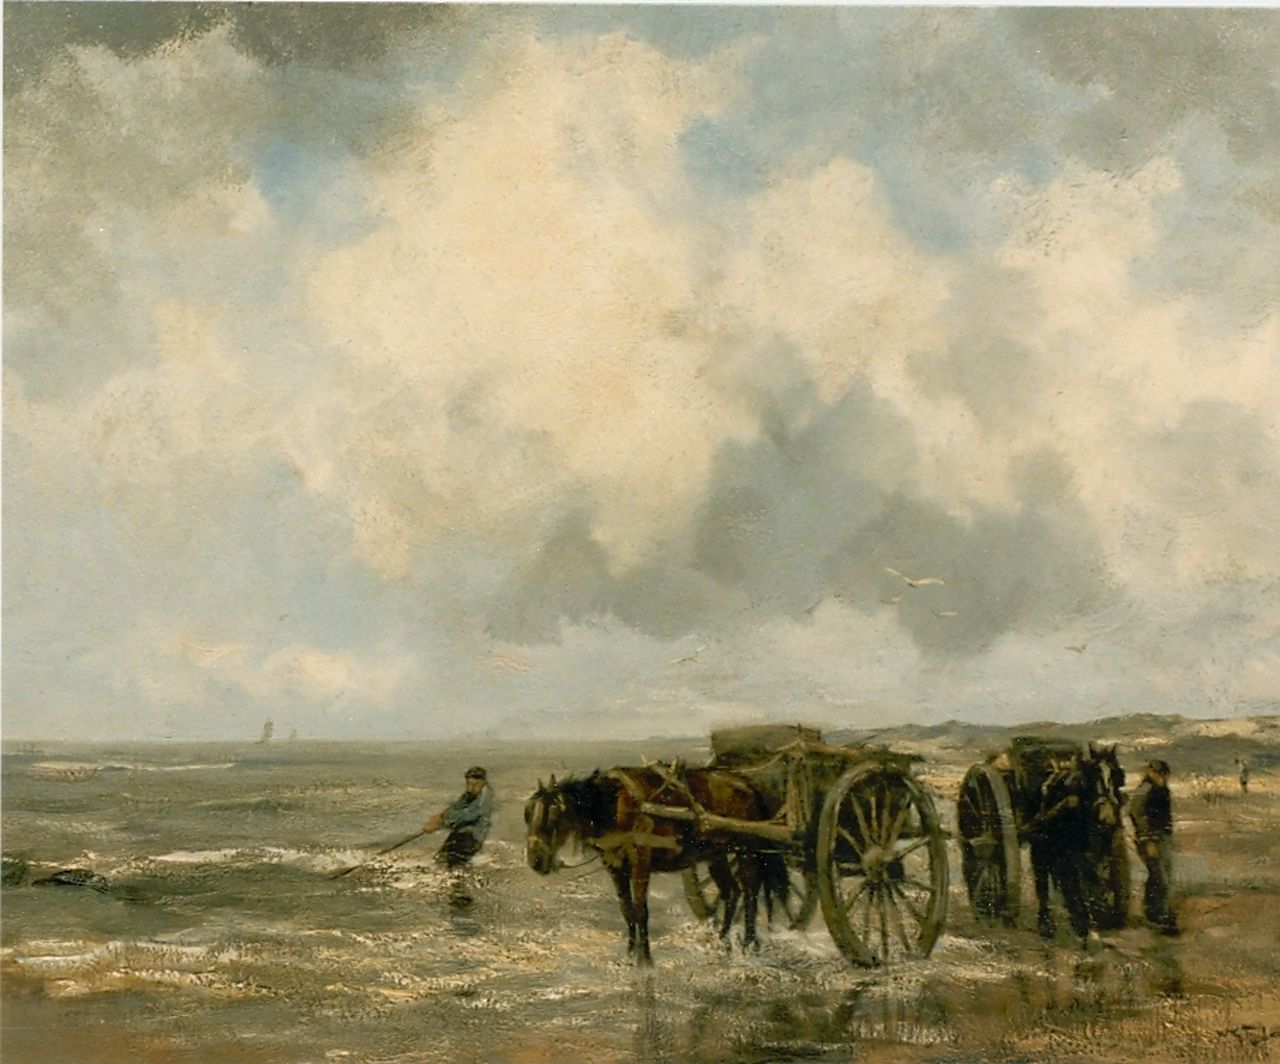 Jansen W.G.F.  | 'Willem' George Frederik Jansen, Shell gatherers on the beach, oil on canvas 73.5 x 93.1 cm, signed l.r.